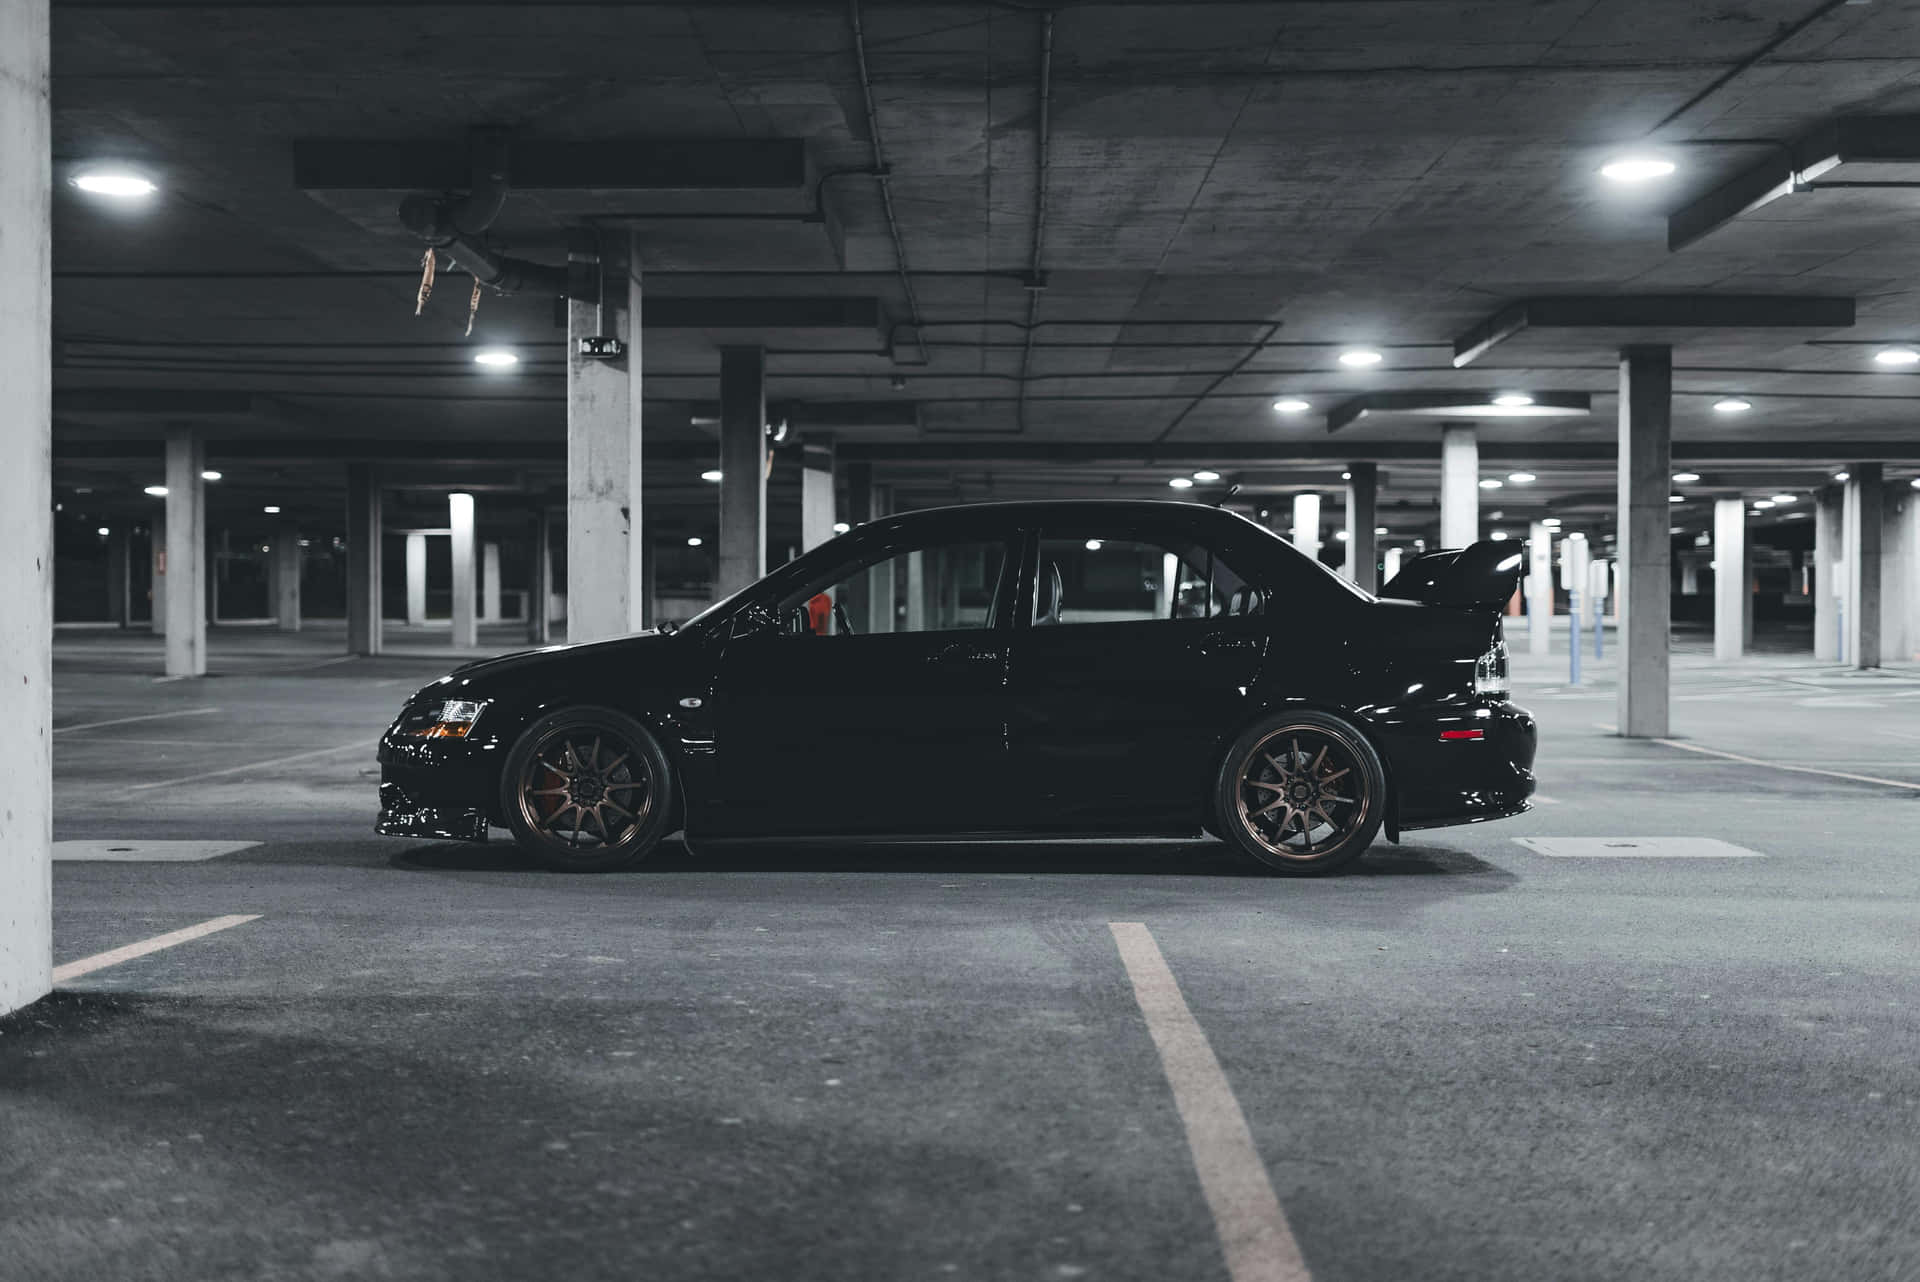 Black Sports Car In Parking Garage Wallpaper